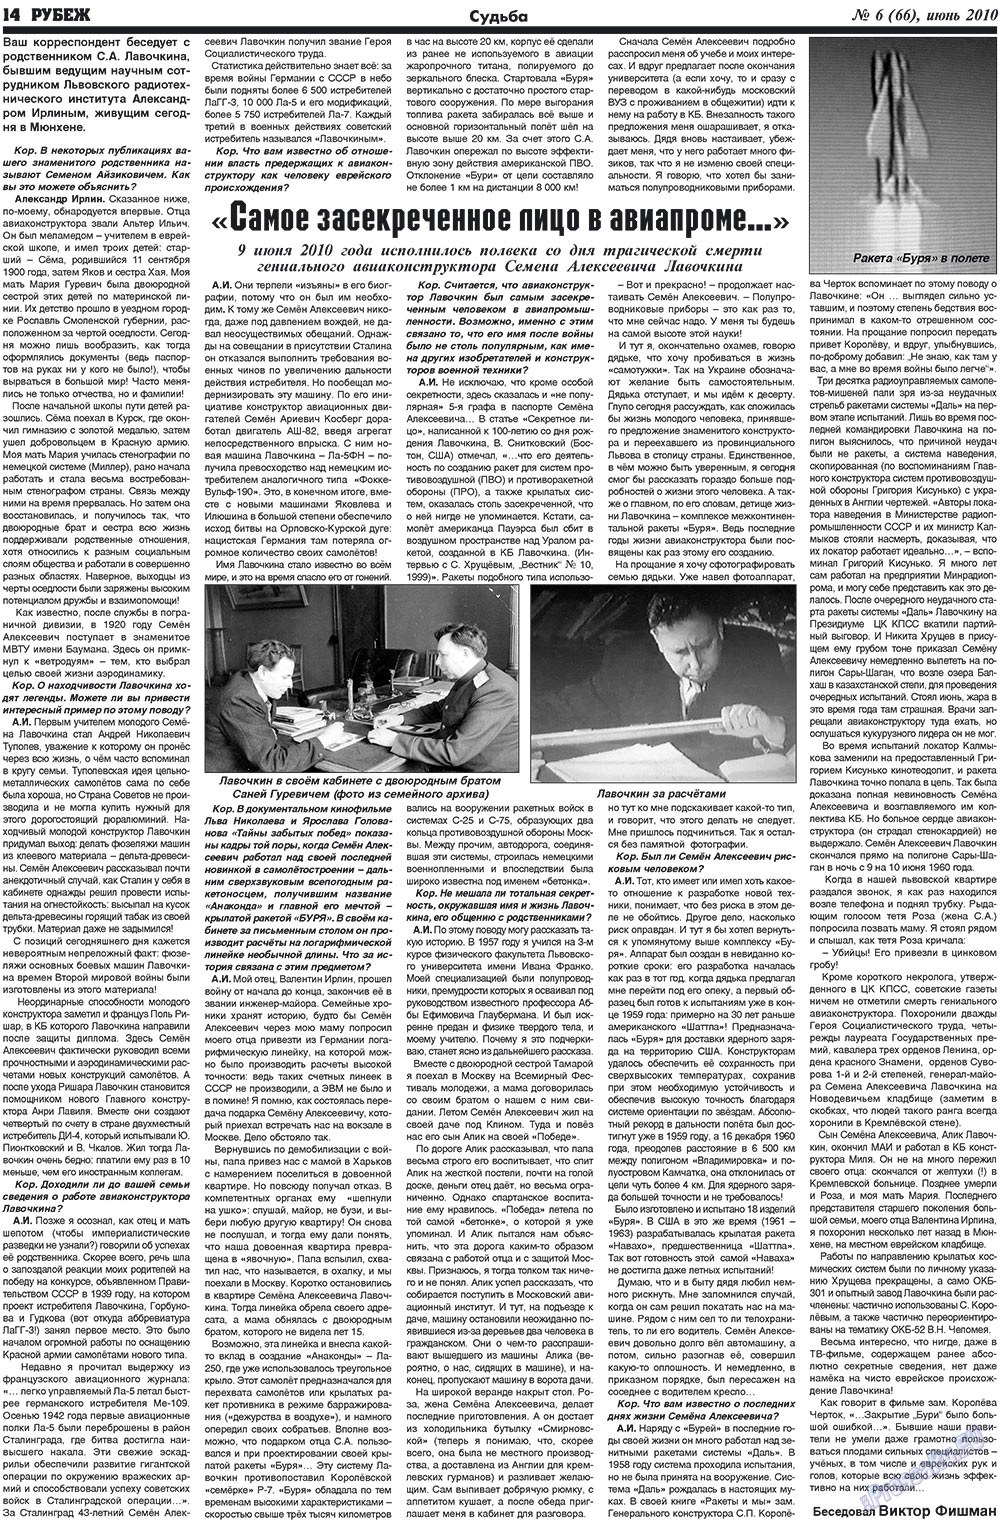 Рубеж, газета. 2010 №6 стр.14